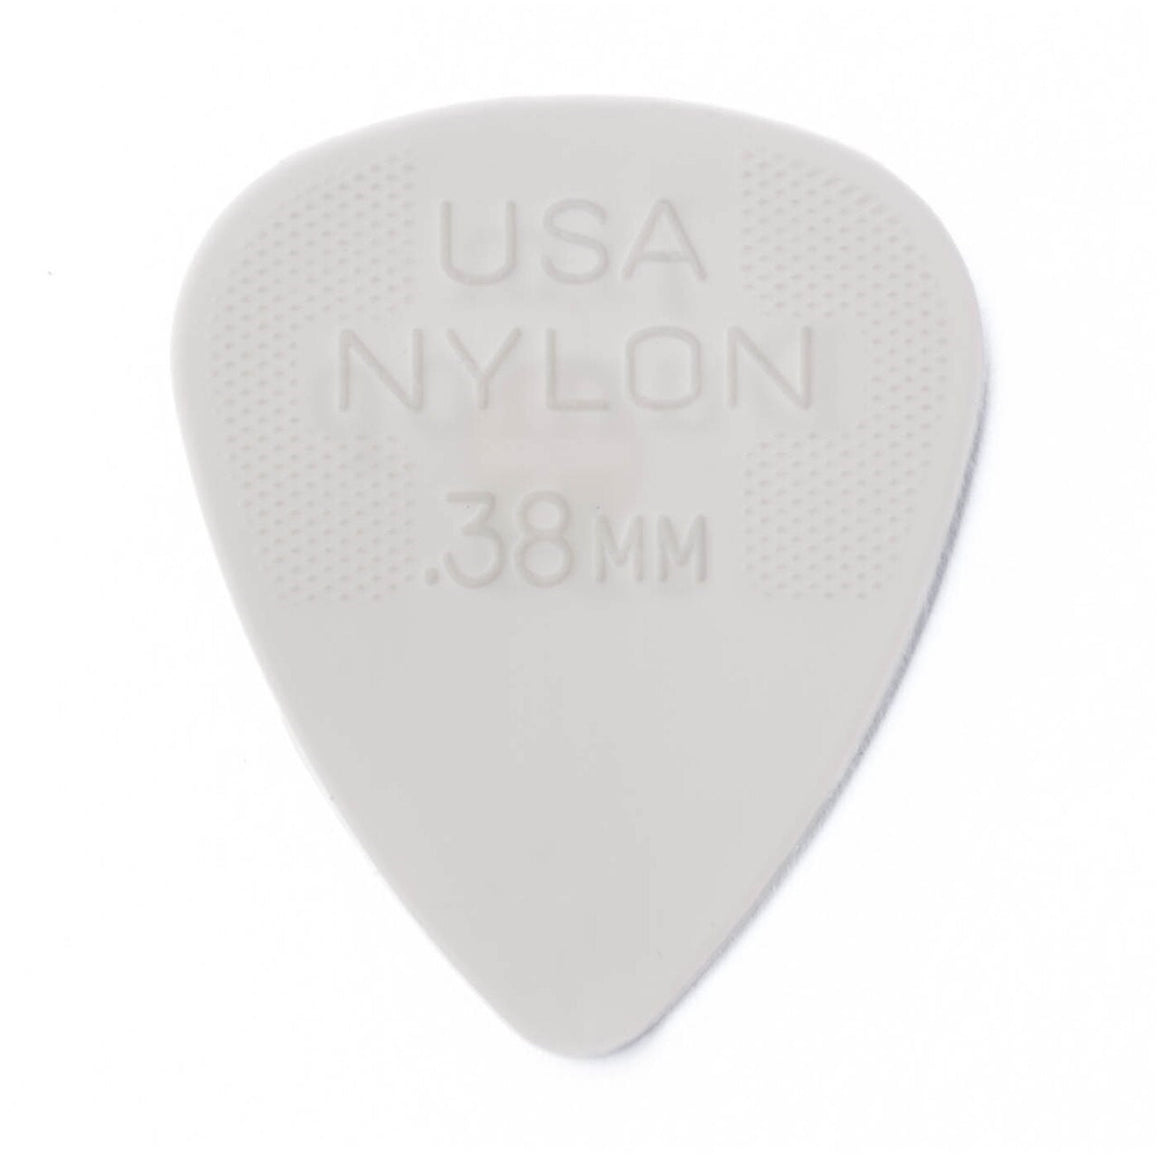 DUNLOP 44P38 .38" Nylon Standard Guitar Picks